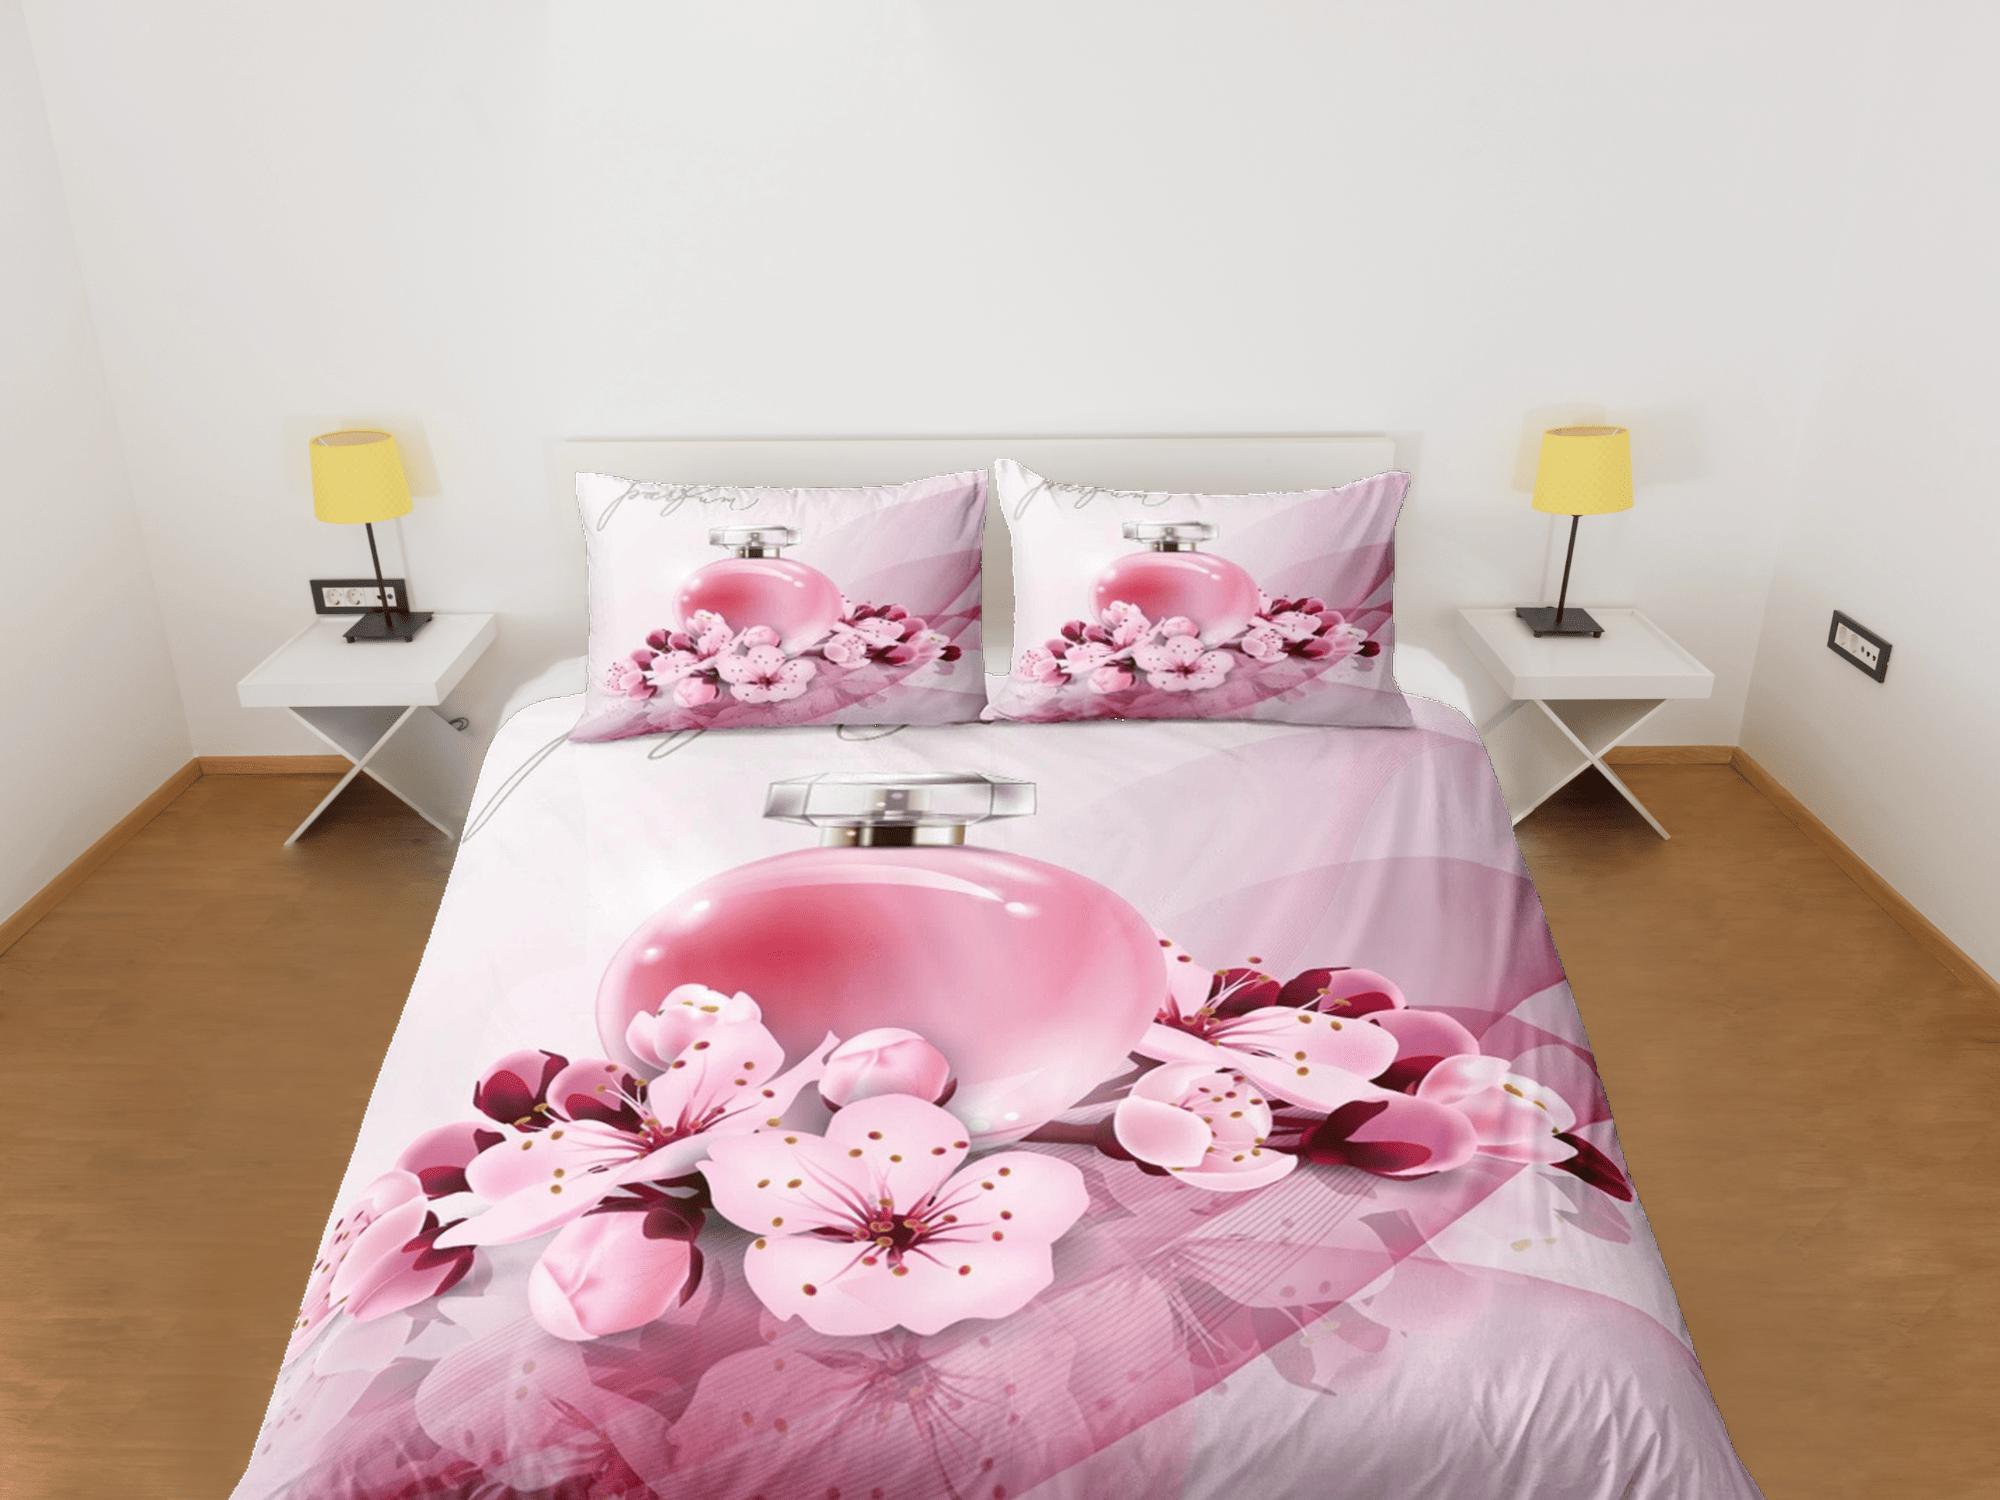 daintyduvet Cherry blossom and perfume bedding floral prints duvet cover queen, king, boho bedding designer bedspread girly full size bedding aesthetic